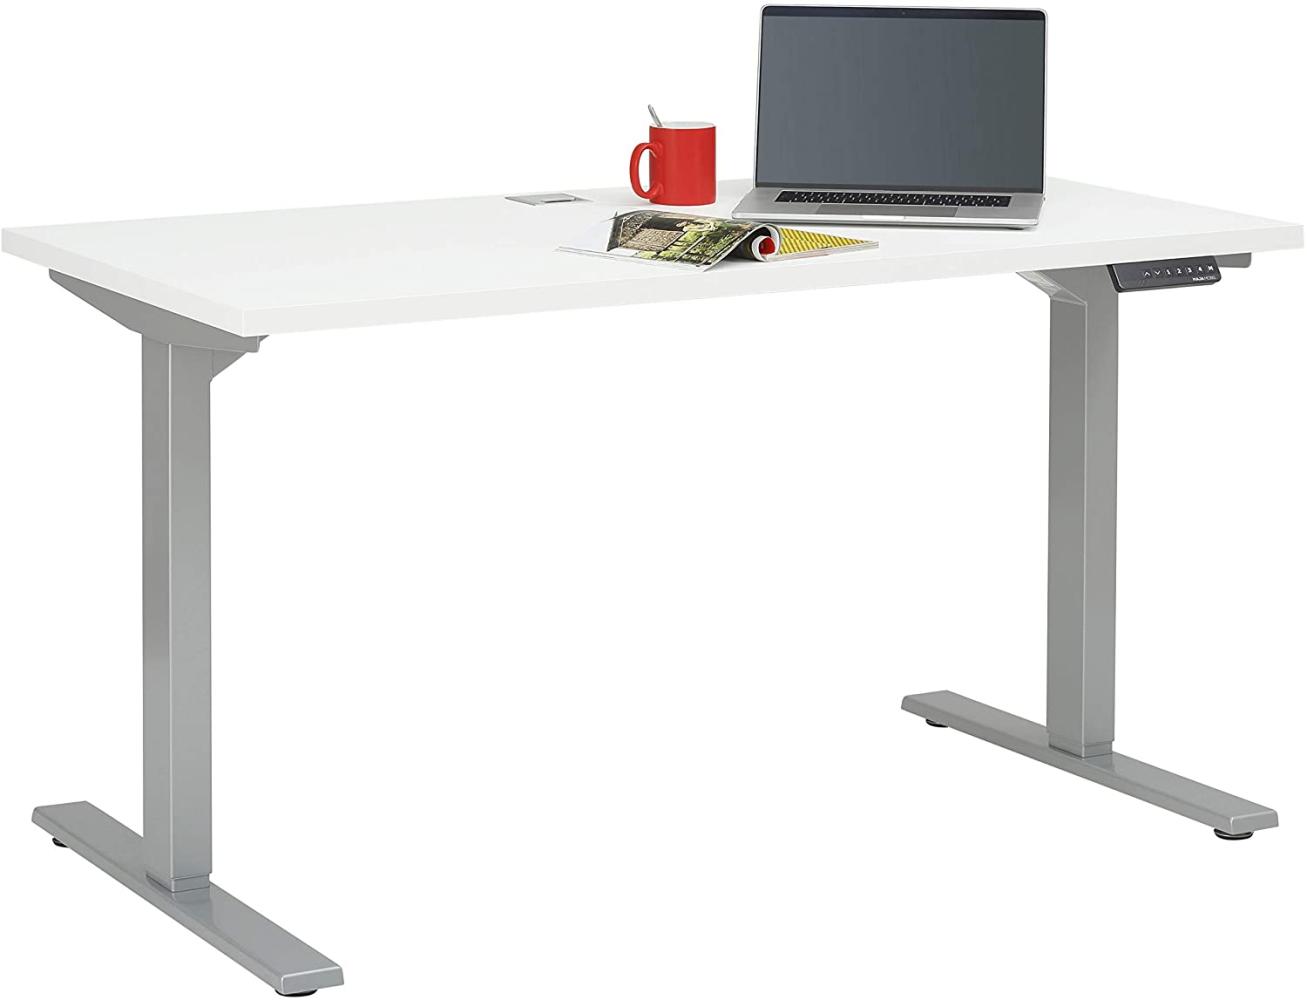 MAJA Möbel eDJUST Schreibtisch, Metall platingrau-weiß matt, ca. 135x120x68 cm Bild 1